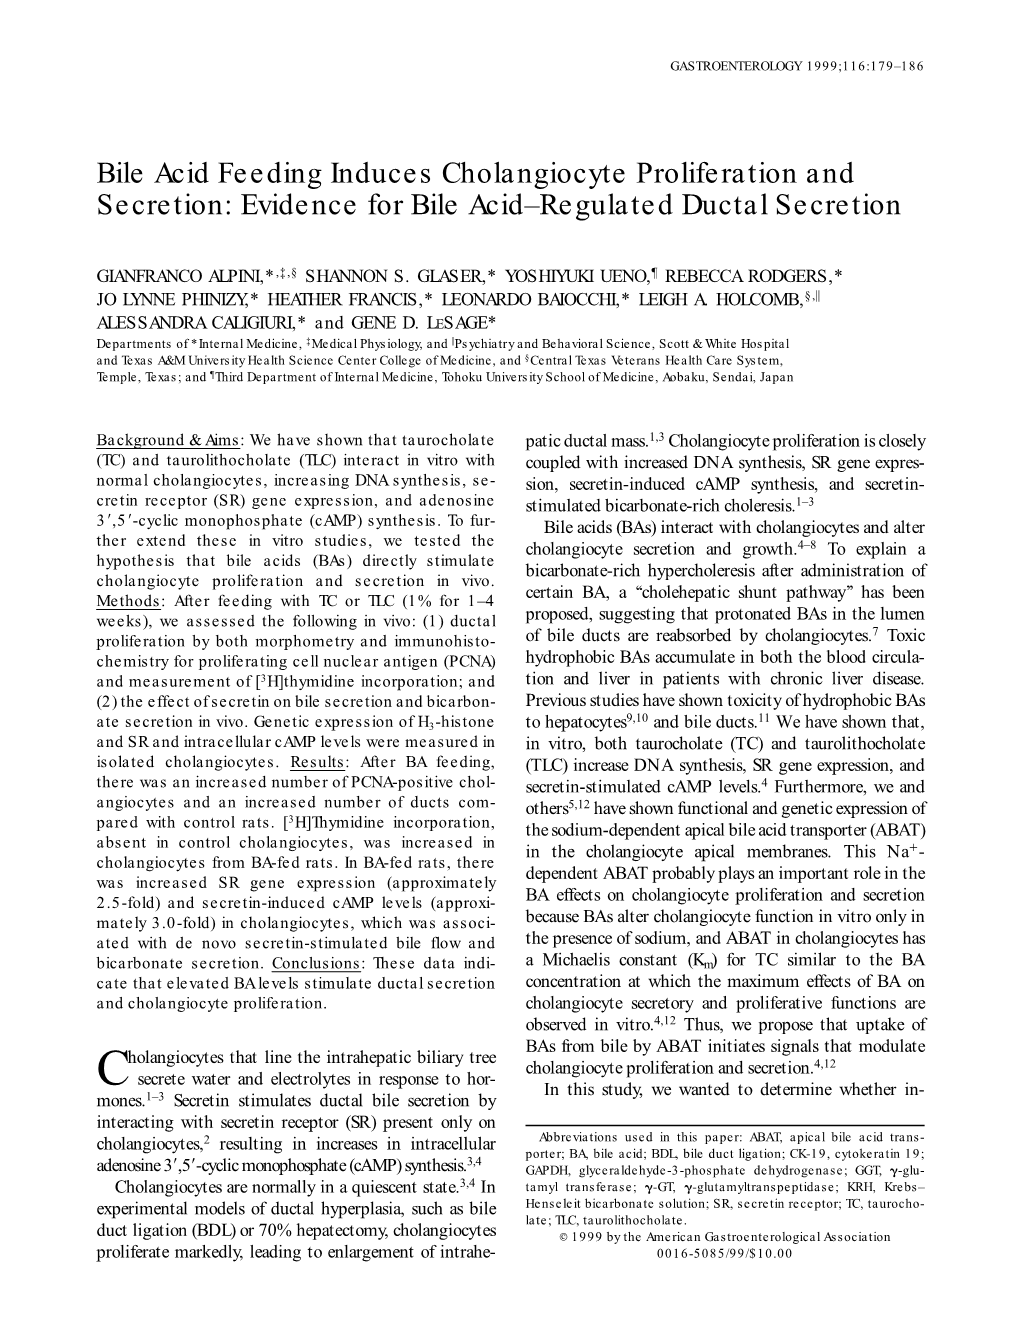 Bile Acid Feeding Induces Cholangiocyte Proliferation and Secretion: Evidence for Bile Acid–Regulated Ductal Secretion